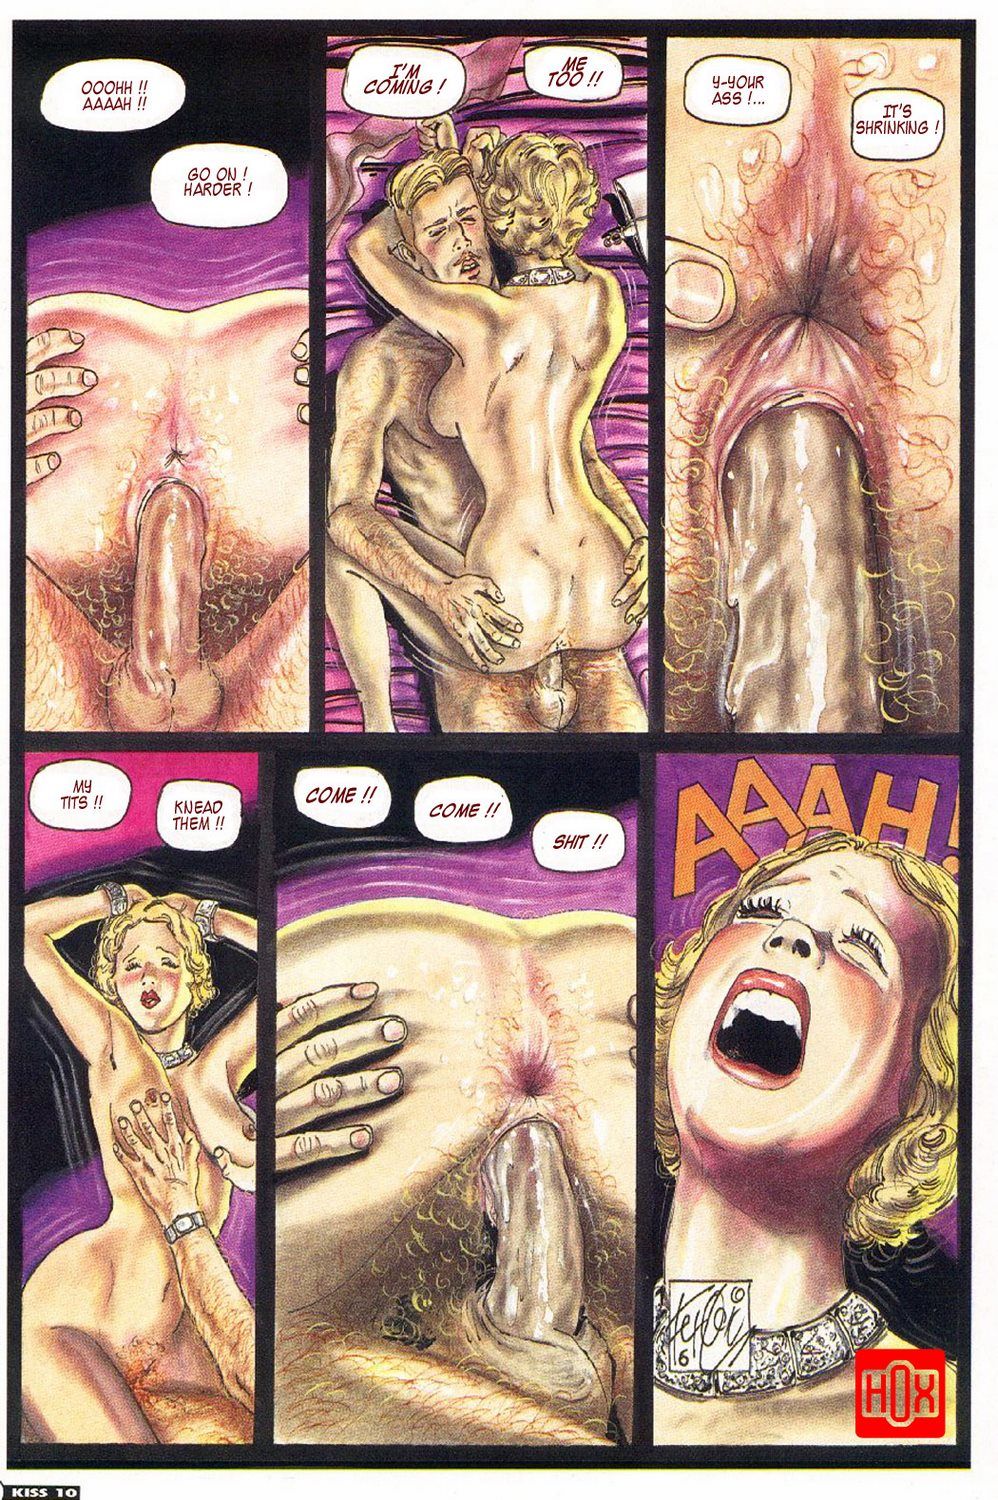 Eurygraphe Ferocius (Erotic Comix) page 8